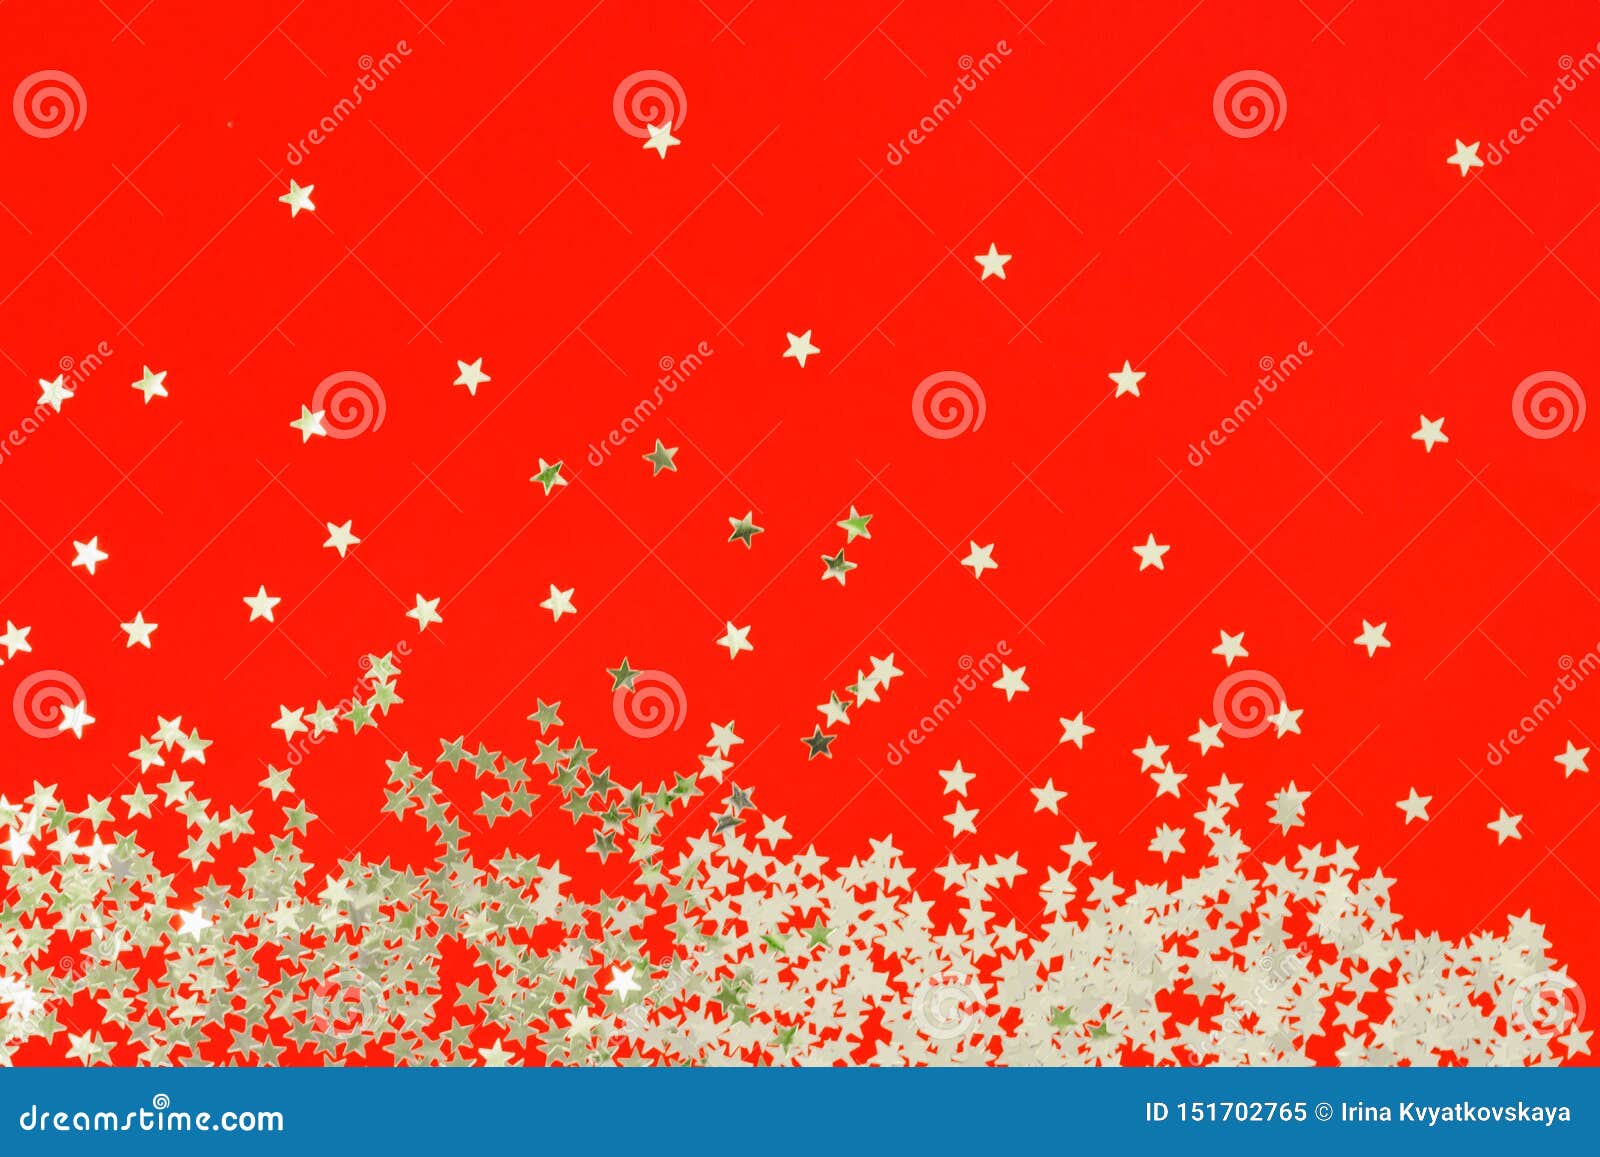 Metallic Shiny Christmas Star Gold Silver Red White Multicolour Star Confetti